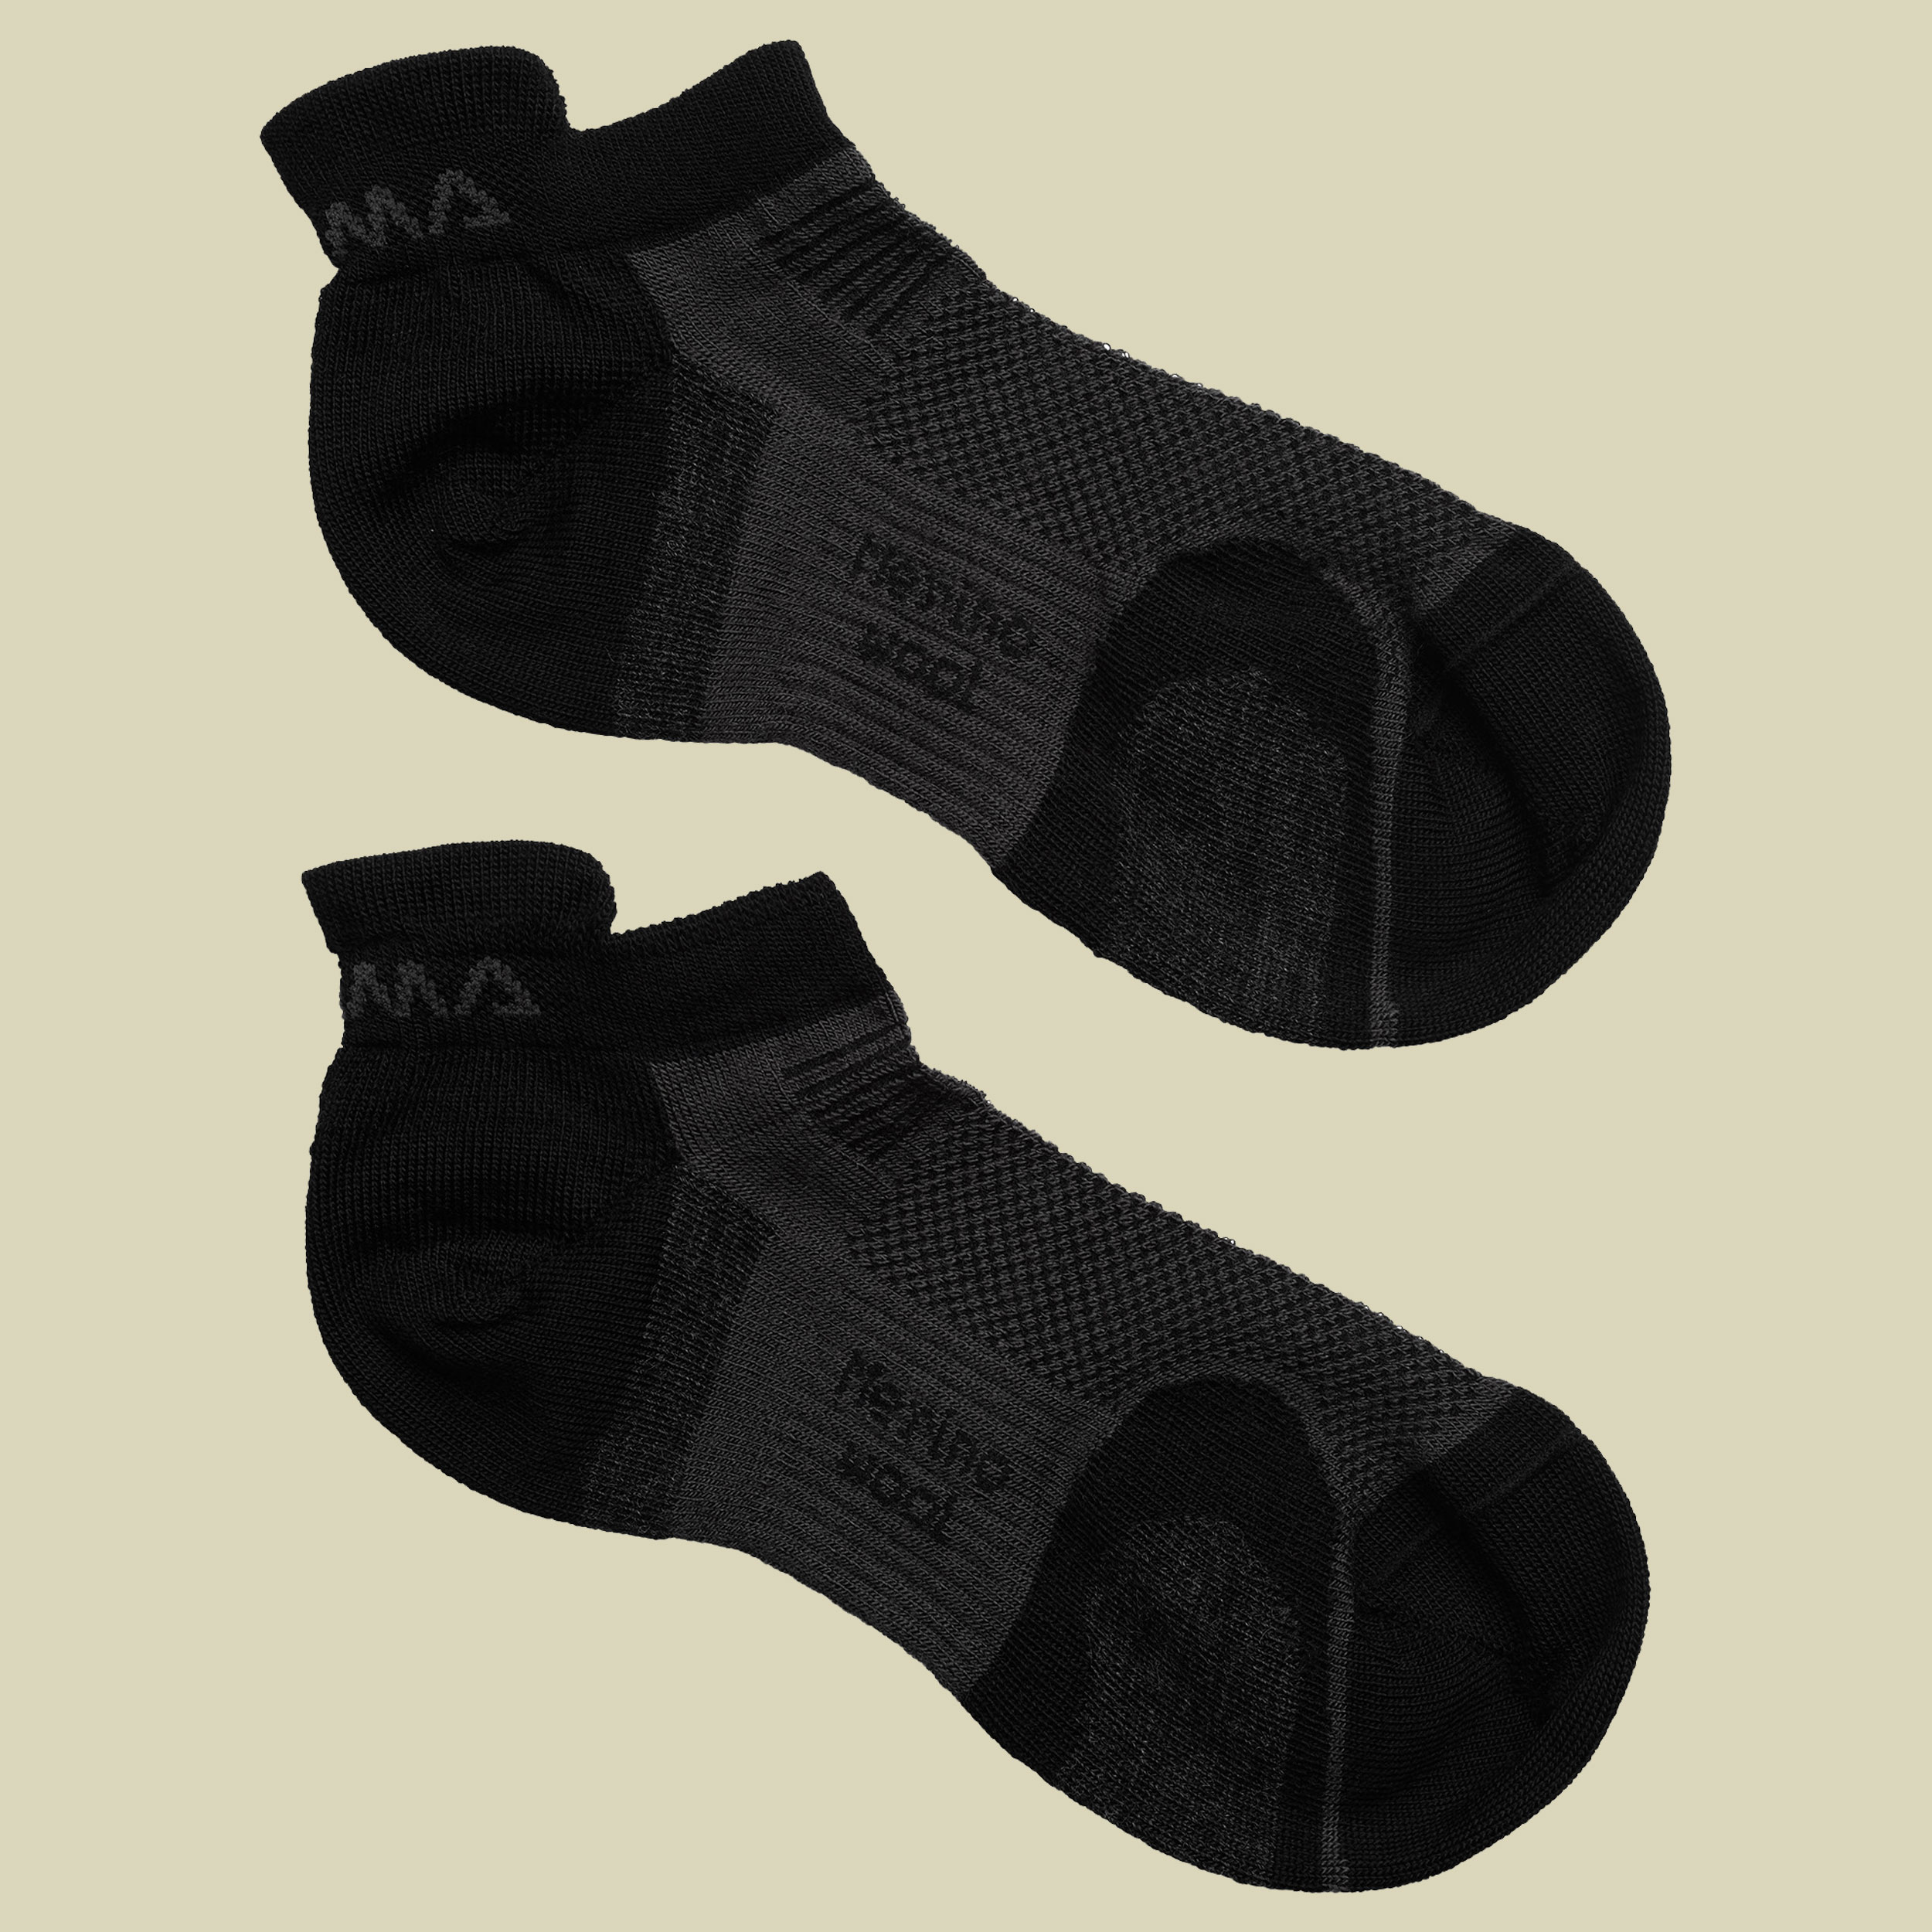 Ankle Socks Größe 44-48 Farbe iron gate/jet black